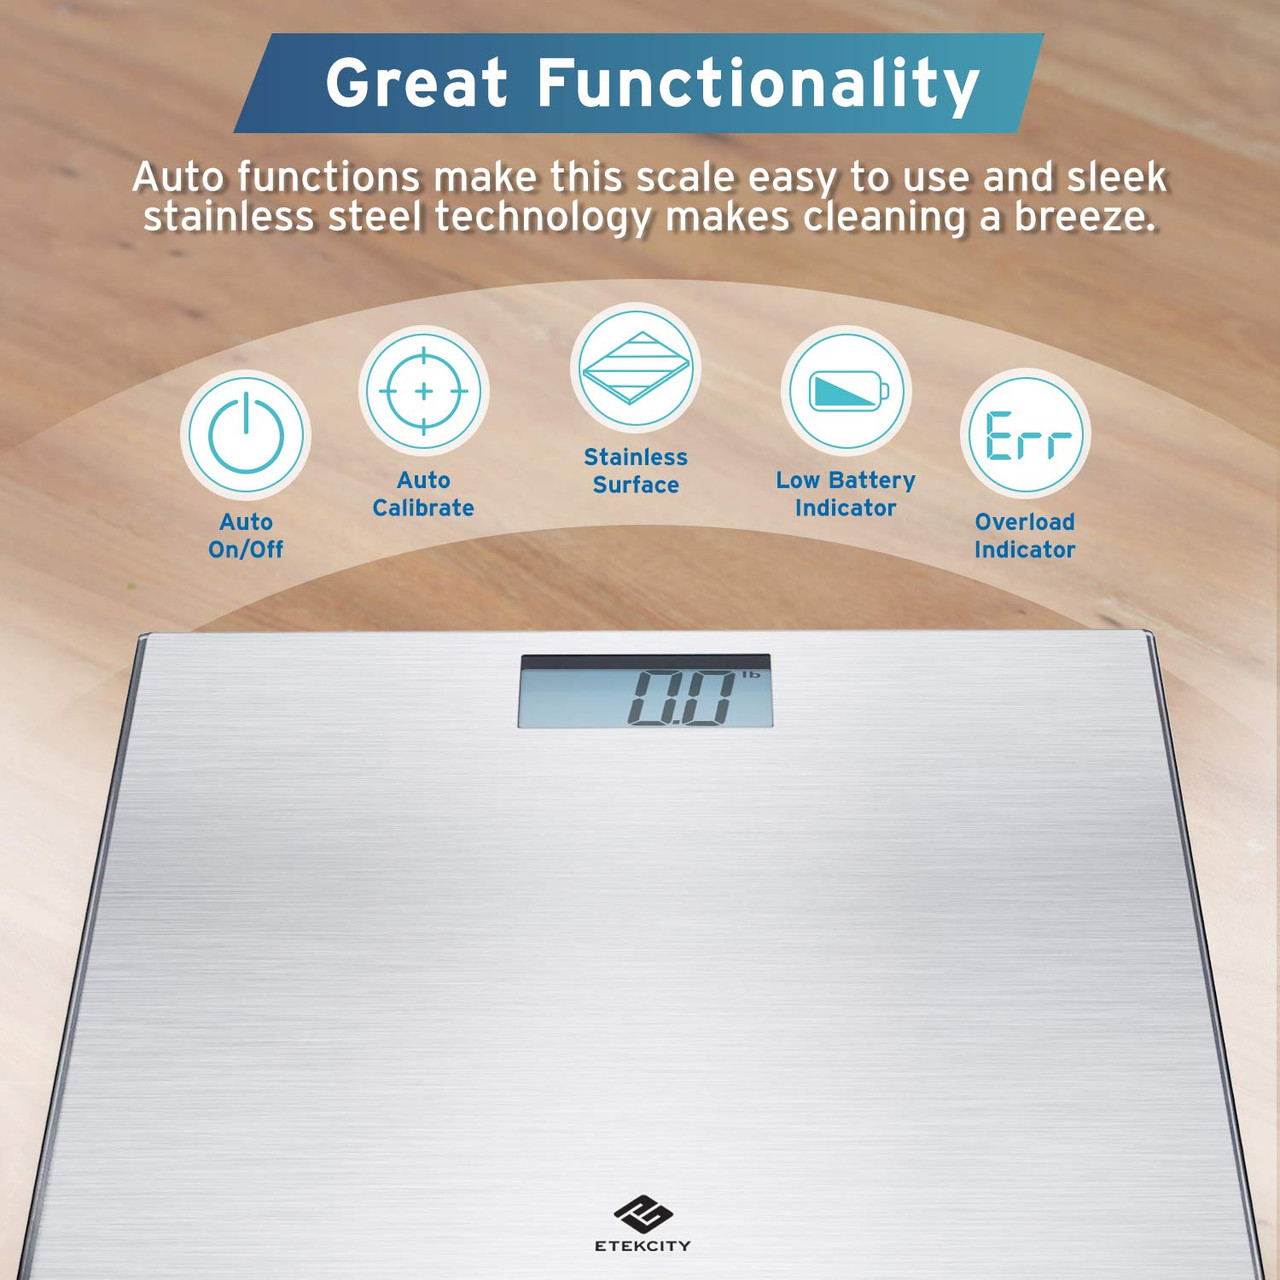 Etekcity Digital Body Weight Bathroom Scale with Step-On